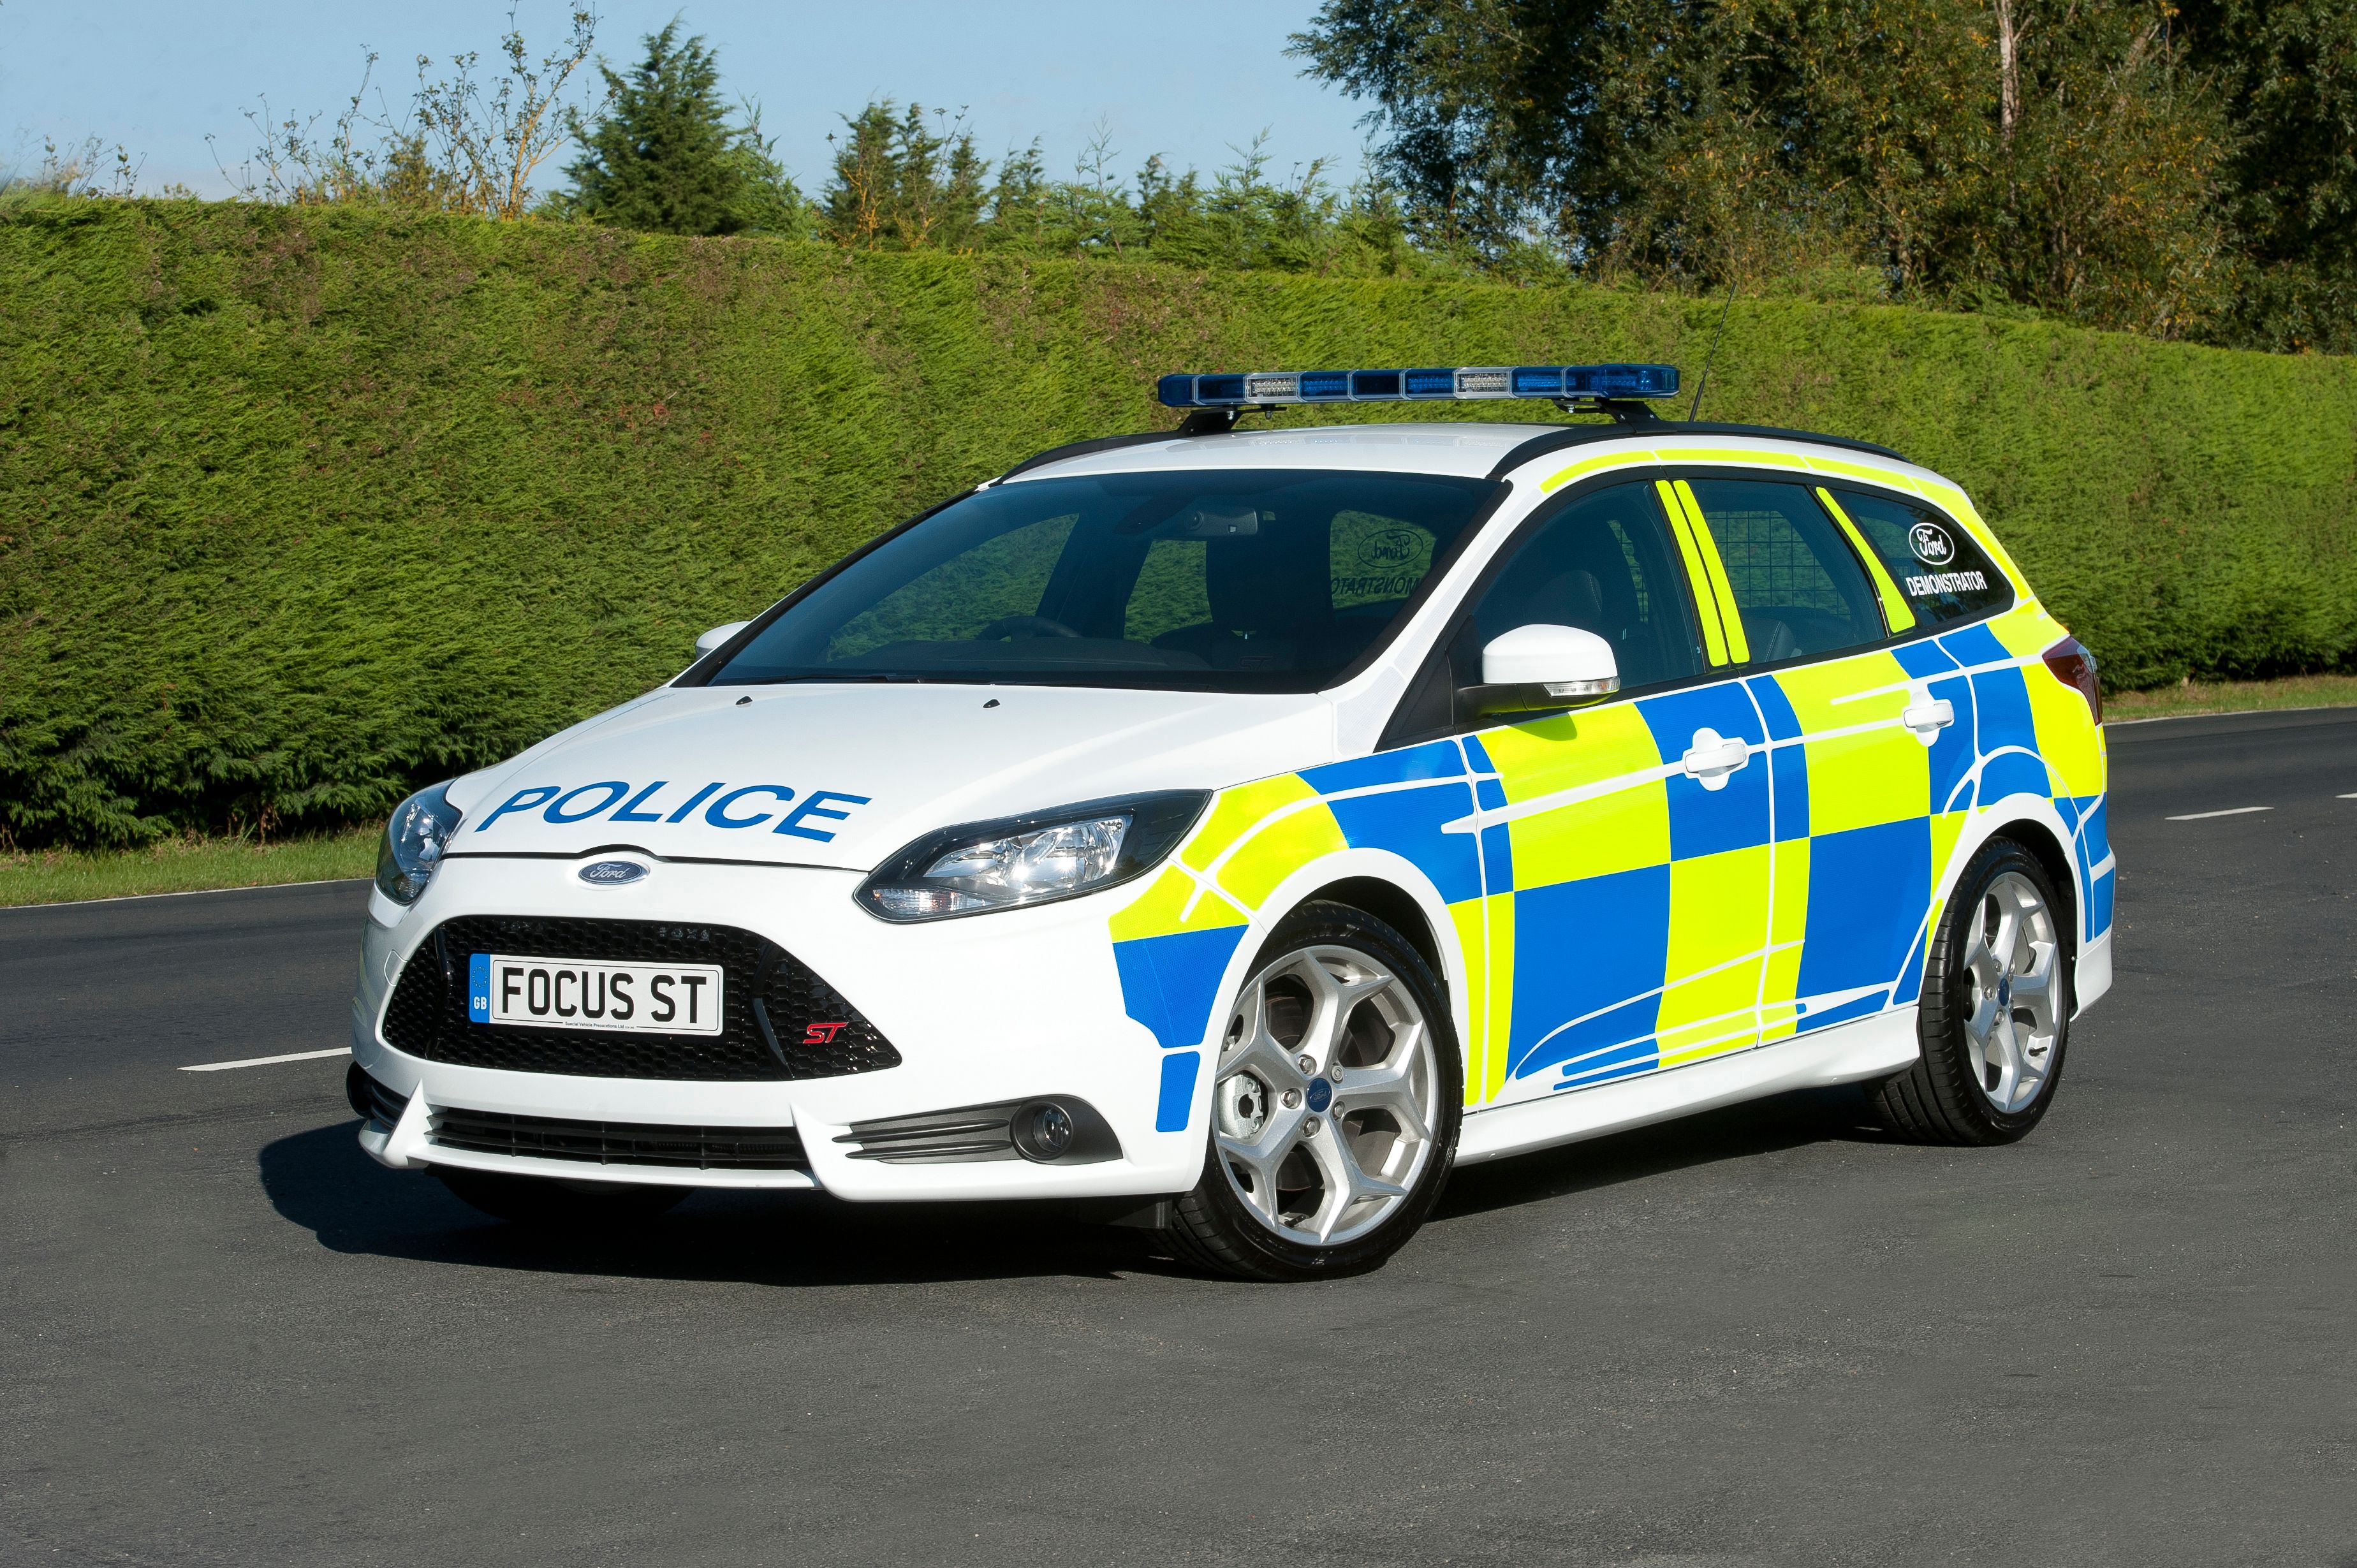 2013 Ford Focus ST Police Patrol Vehicle